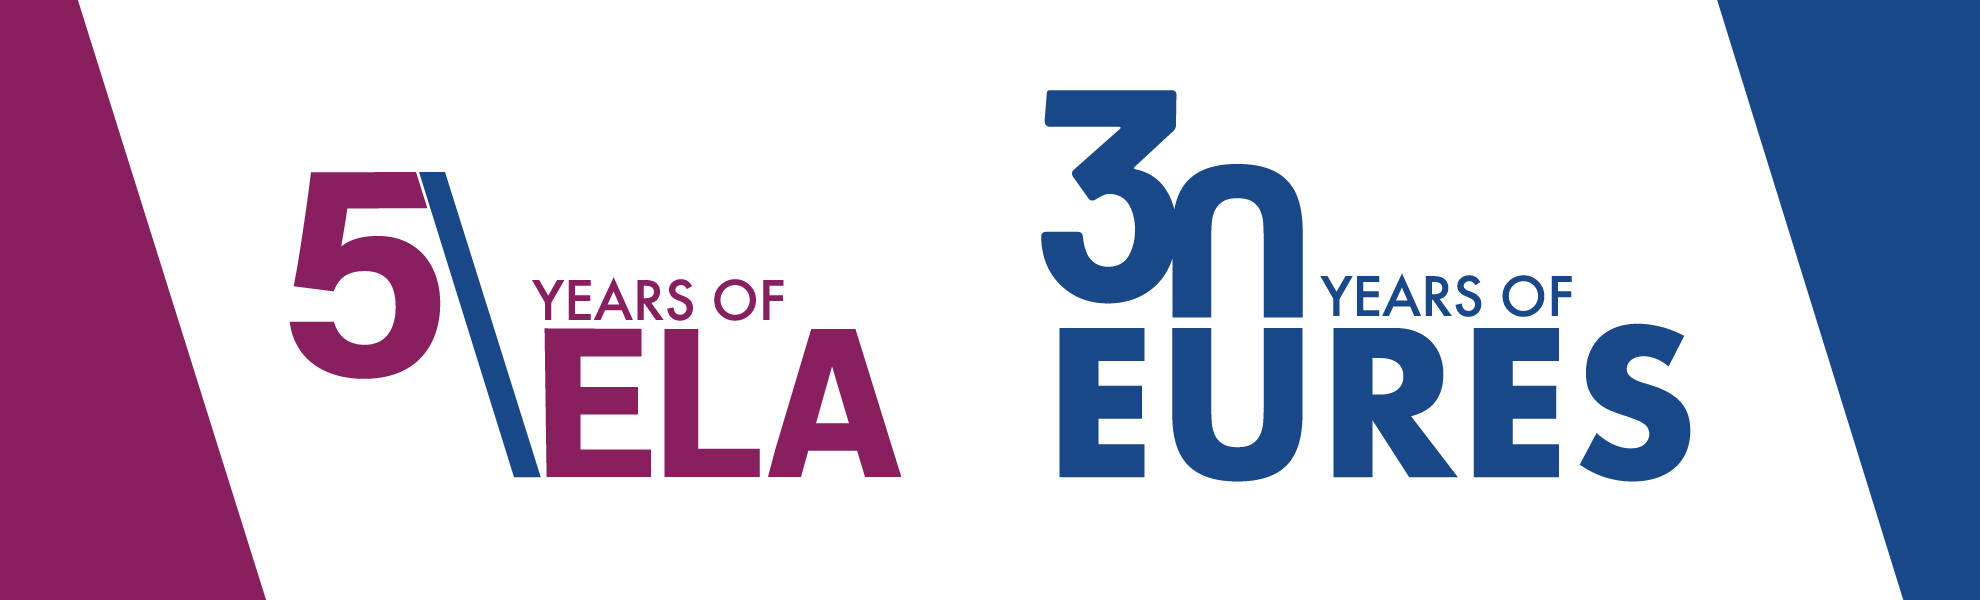 ELA5 EURES30 - Homepage banner